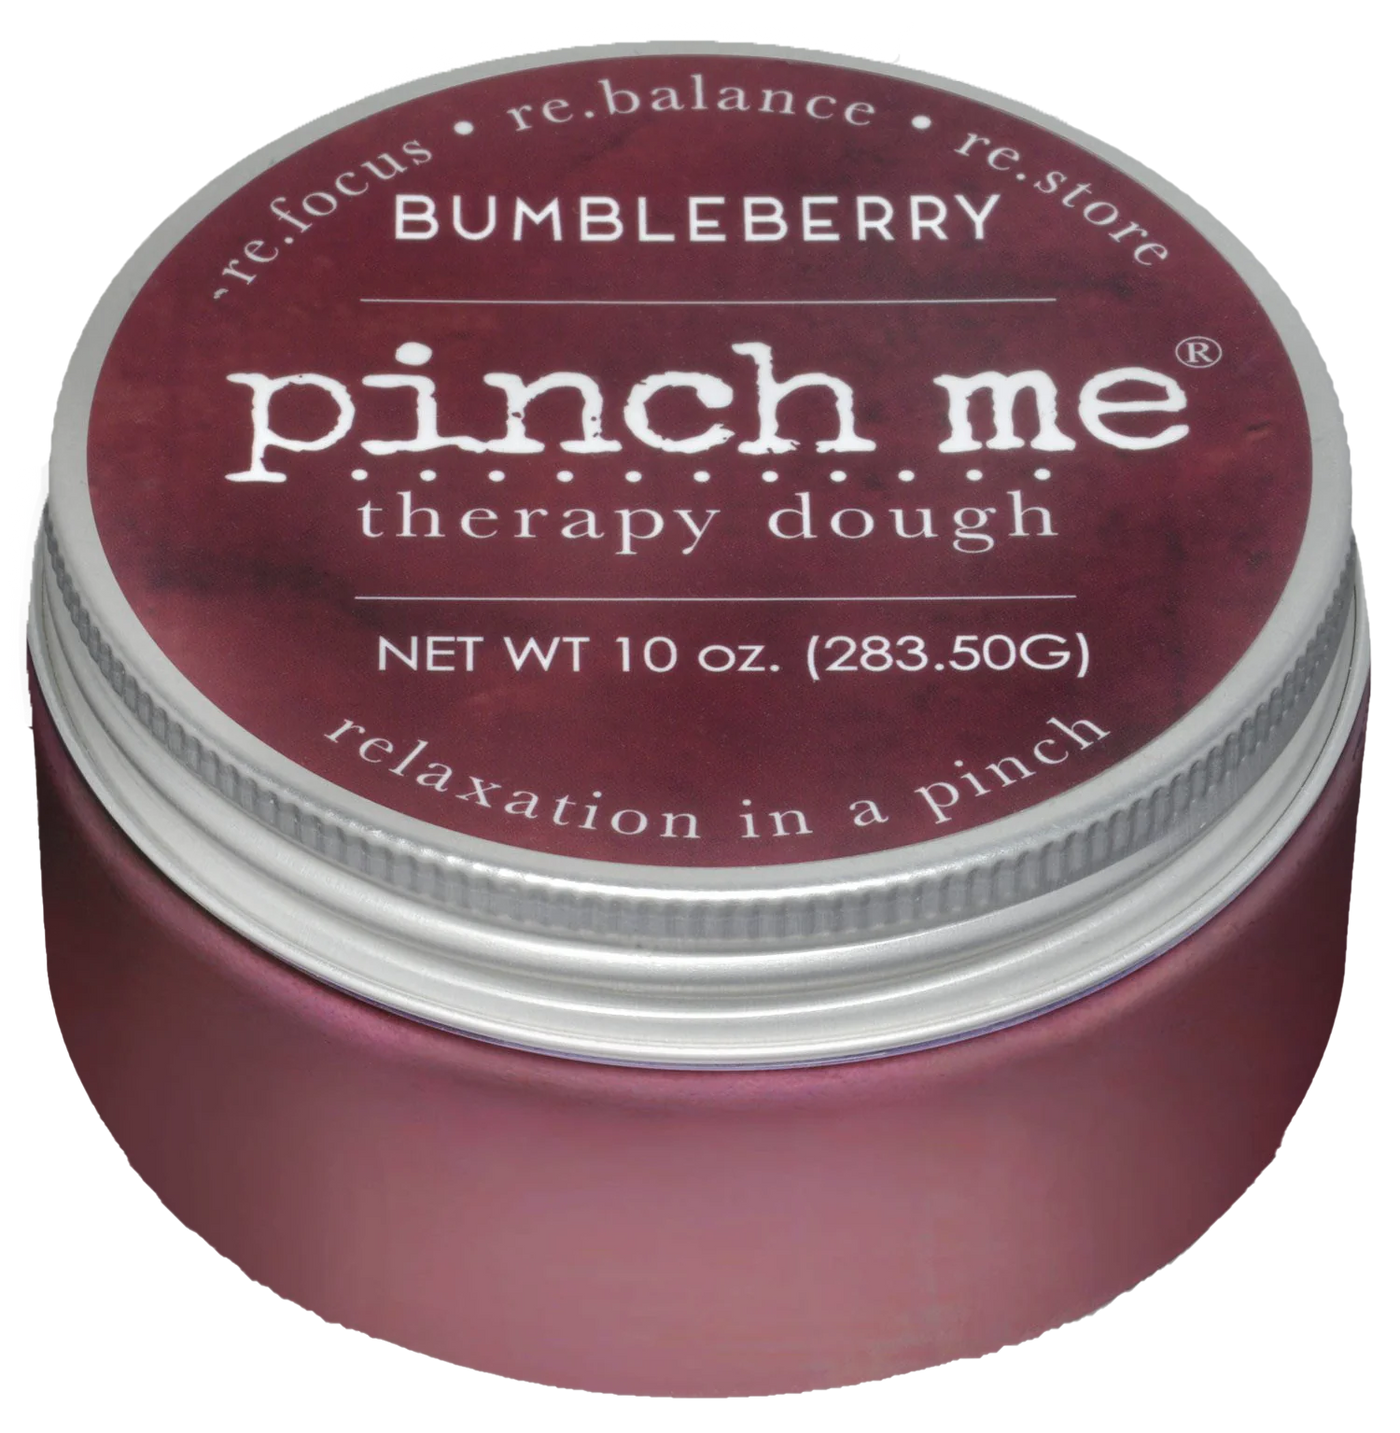 Pinch Me- Bumbleberry